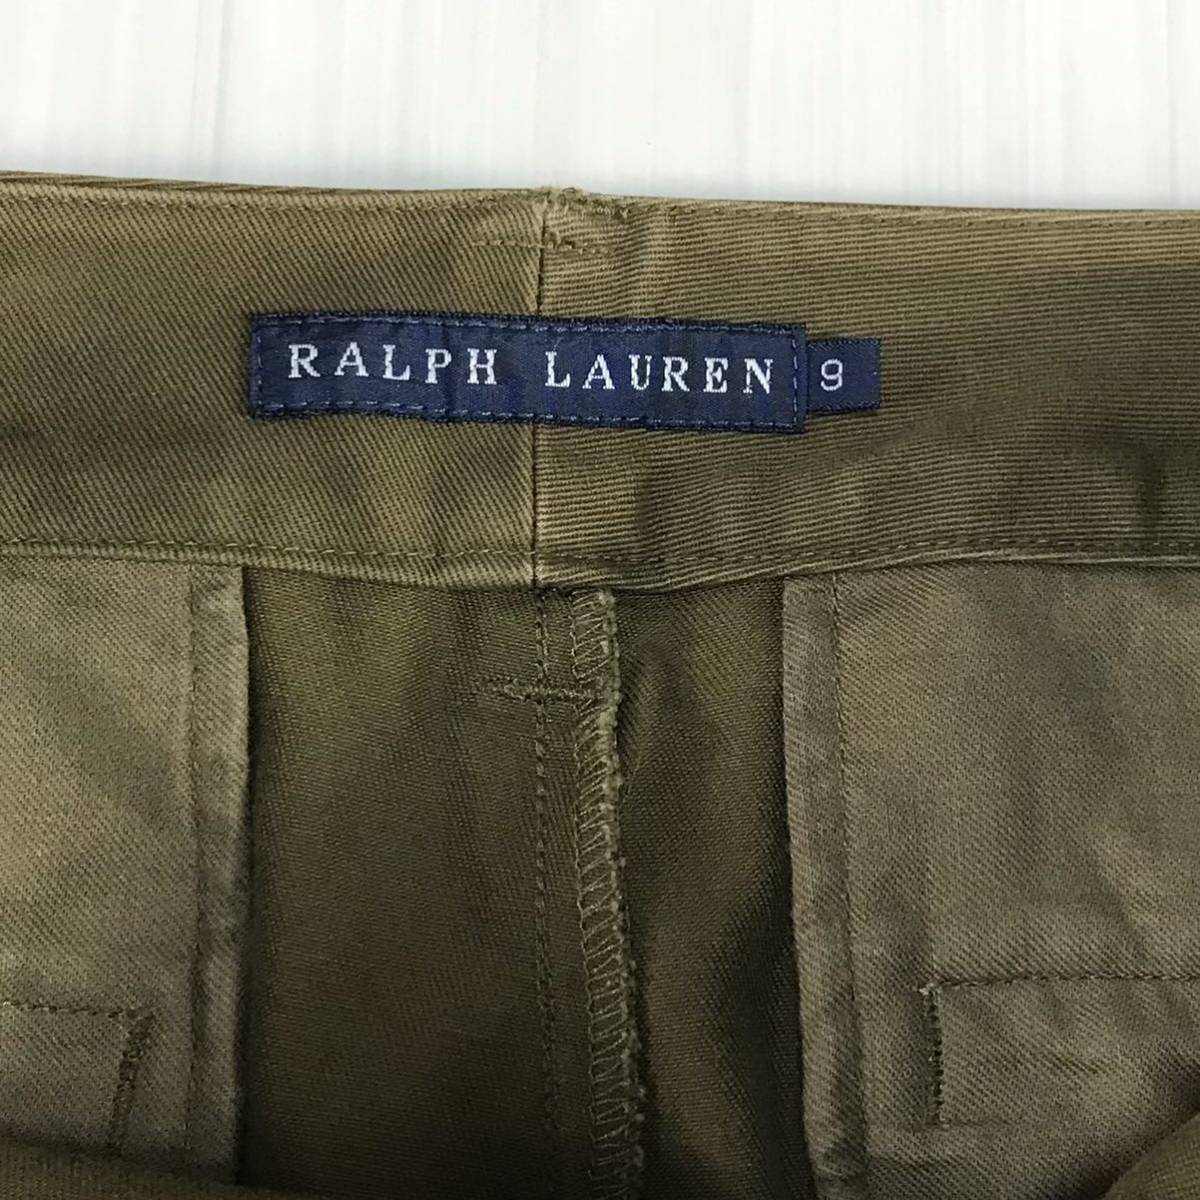 RALPH LAUREN Ralph Lauren strut pants bottoms cotton bread 9 khaki -